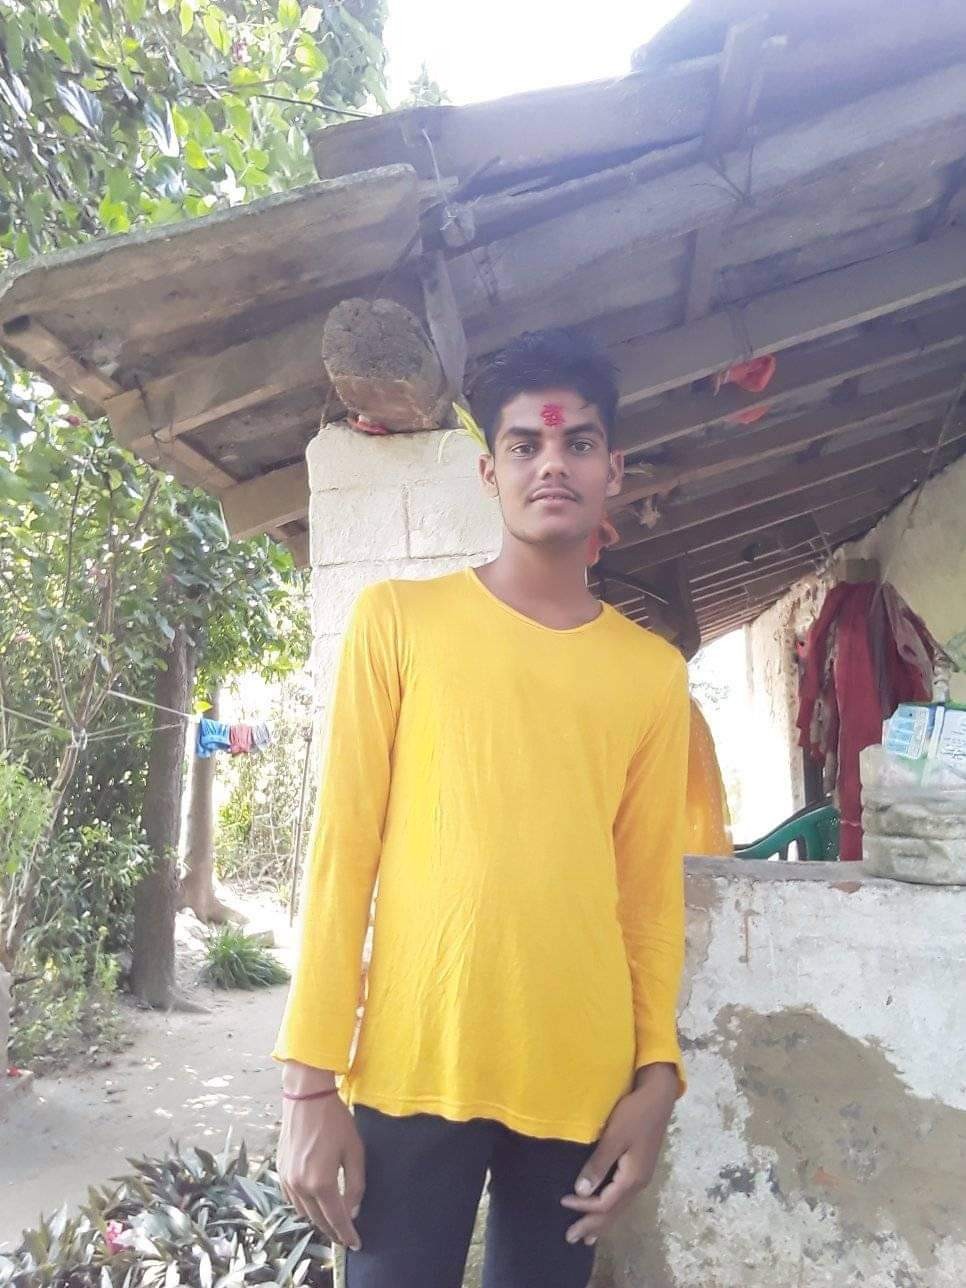 २० वर्षीय रुपक राज जोशी पछिल्लो दुई महिनादेखि बेपत्ता